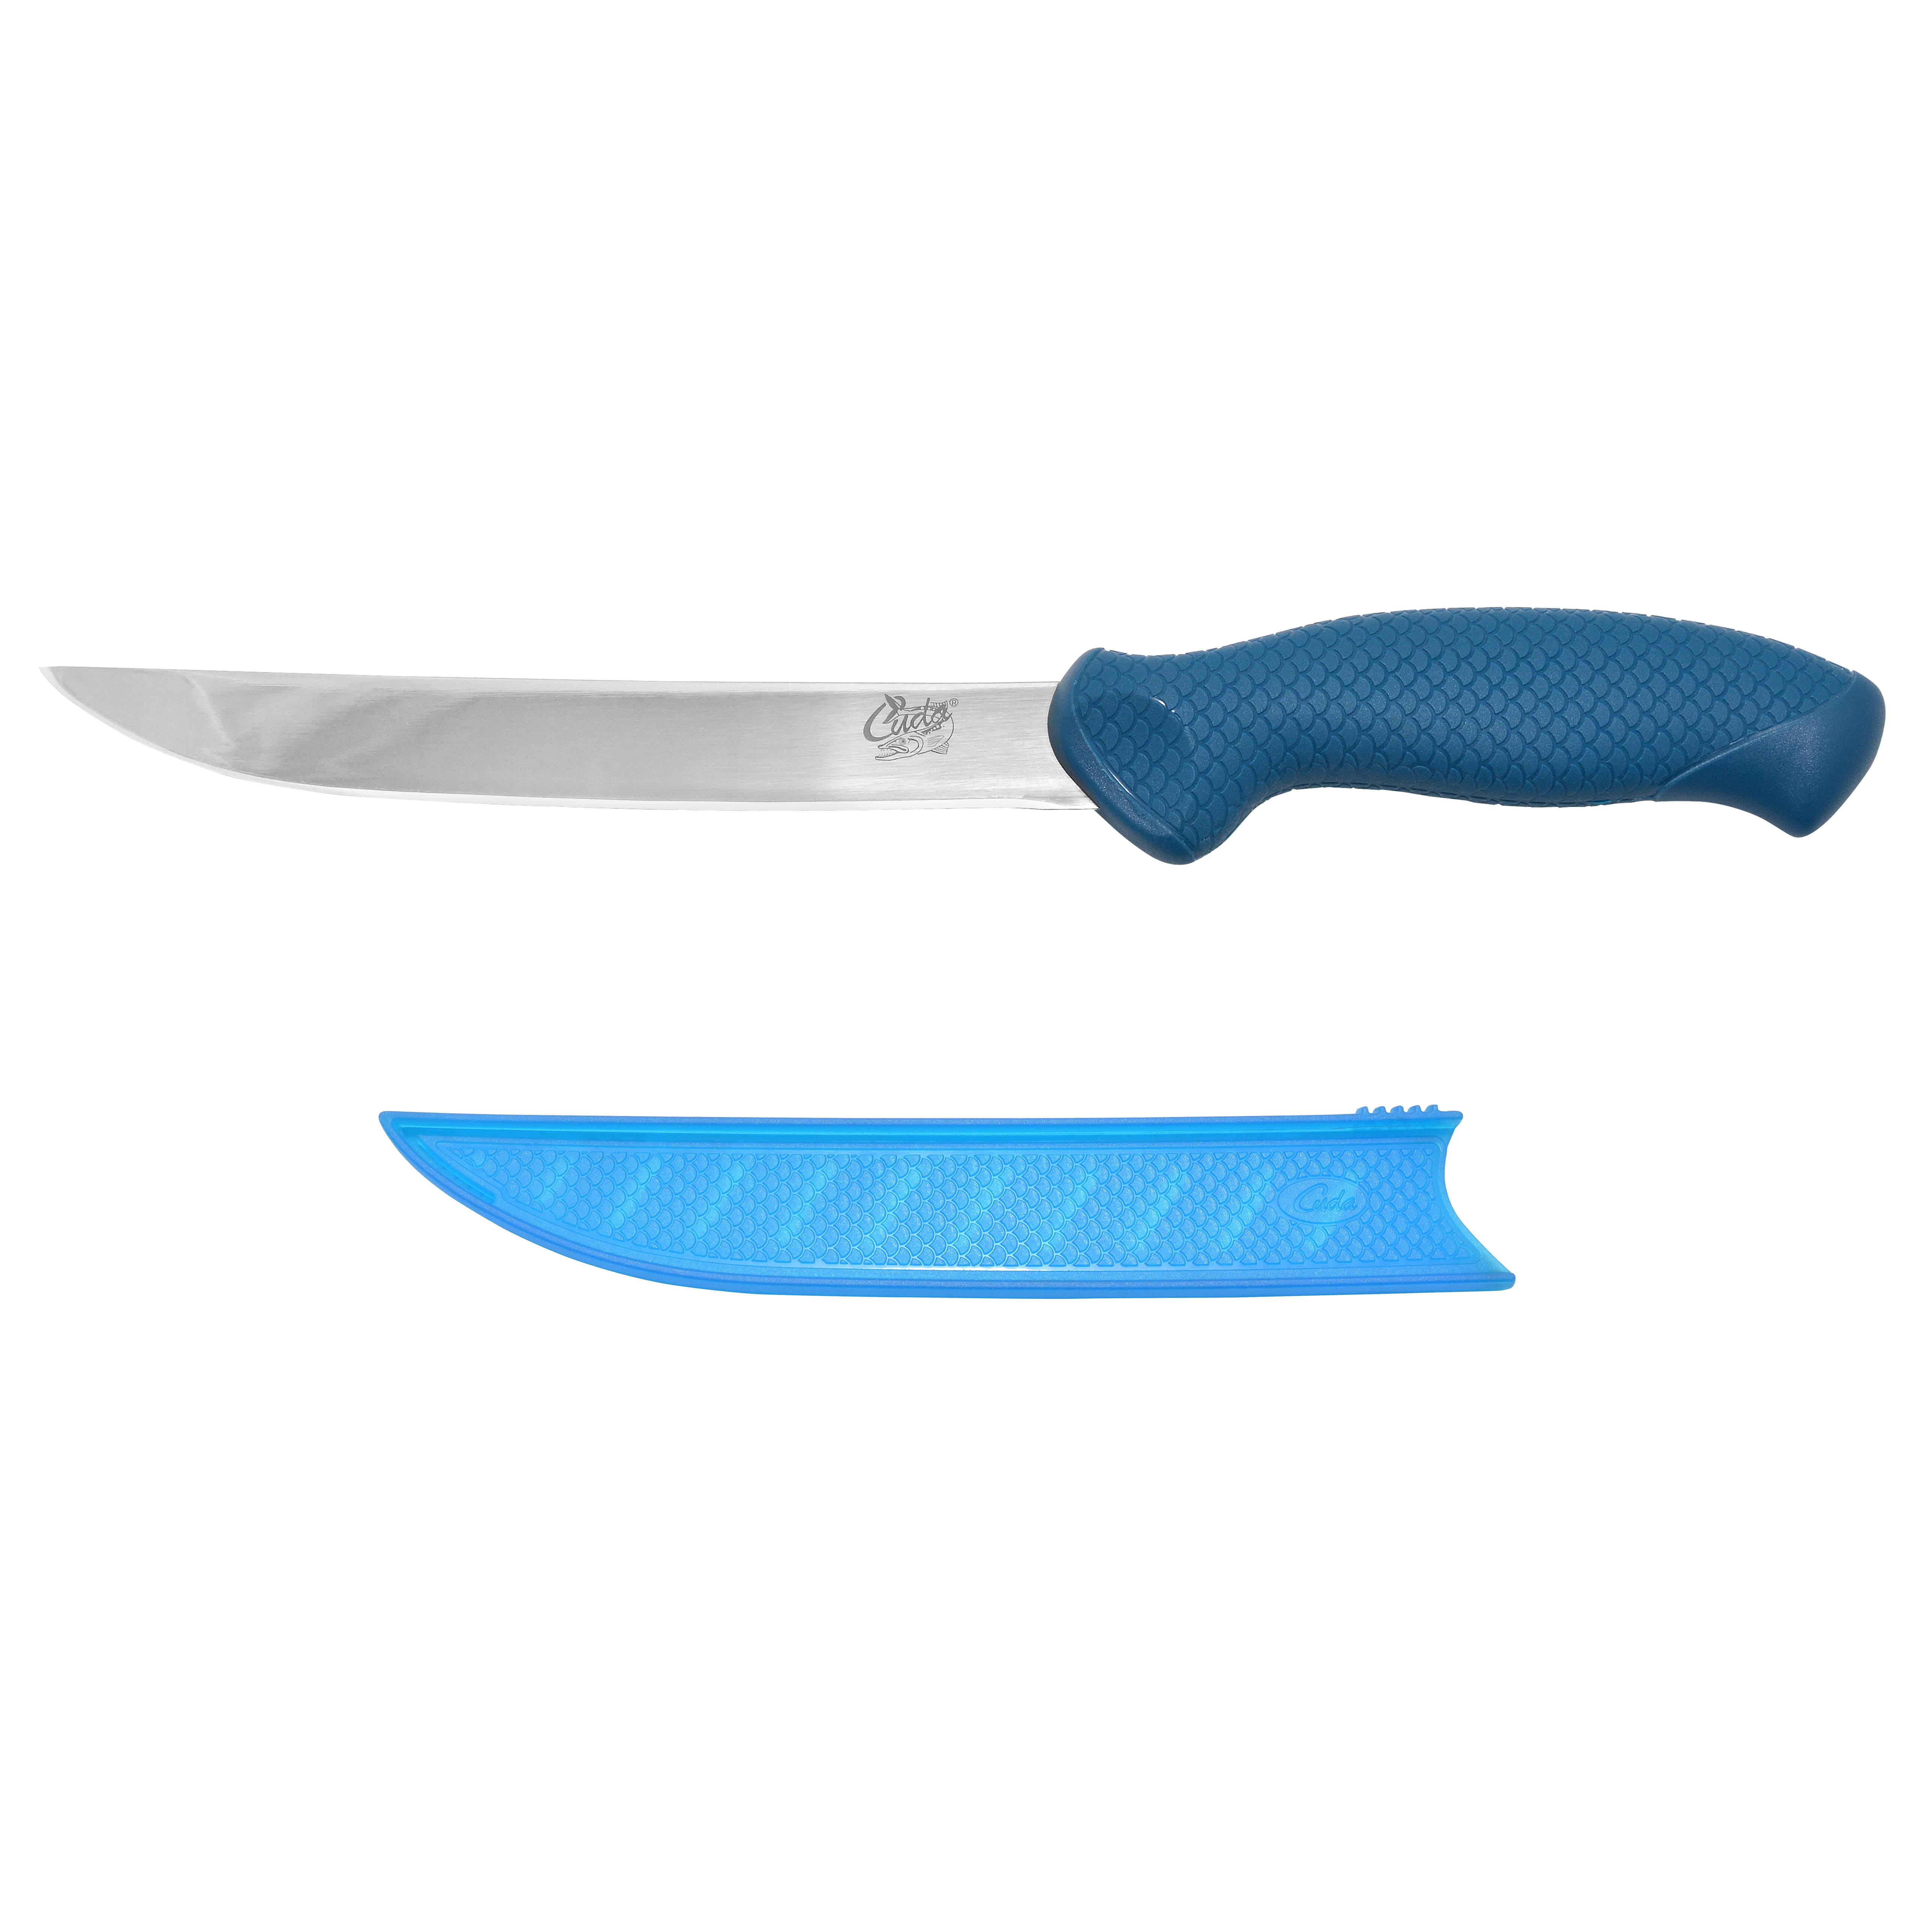 Cuda AquaTuff Carbide Edge 7 Fillet Knife, Wide with Blade Cover